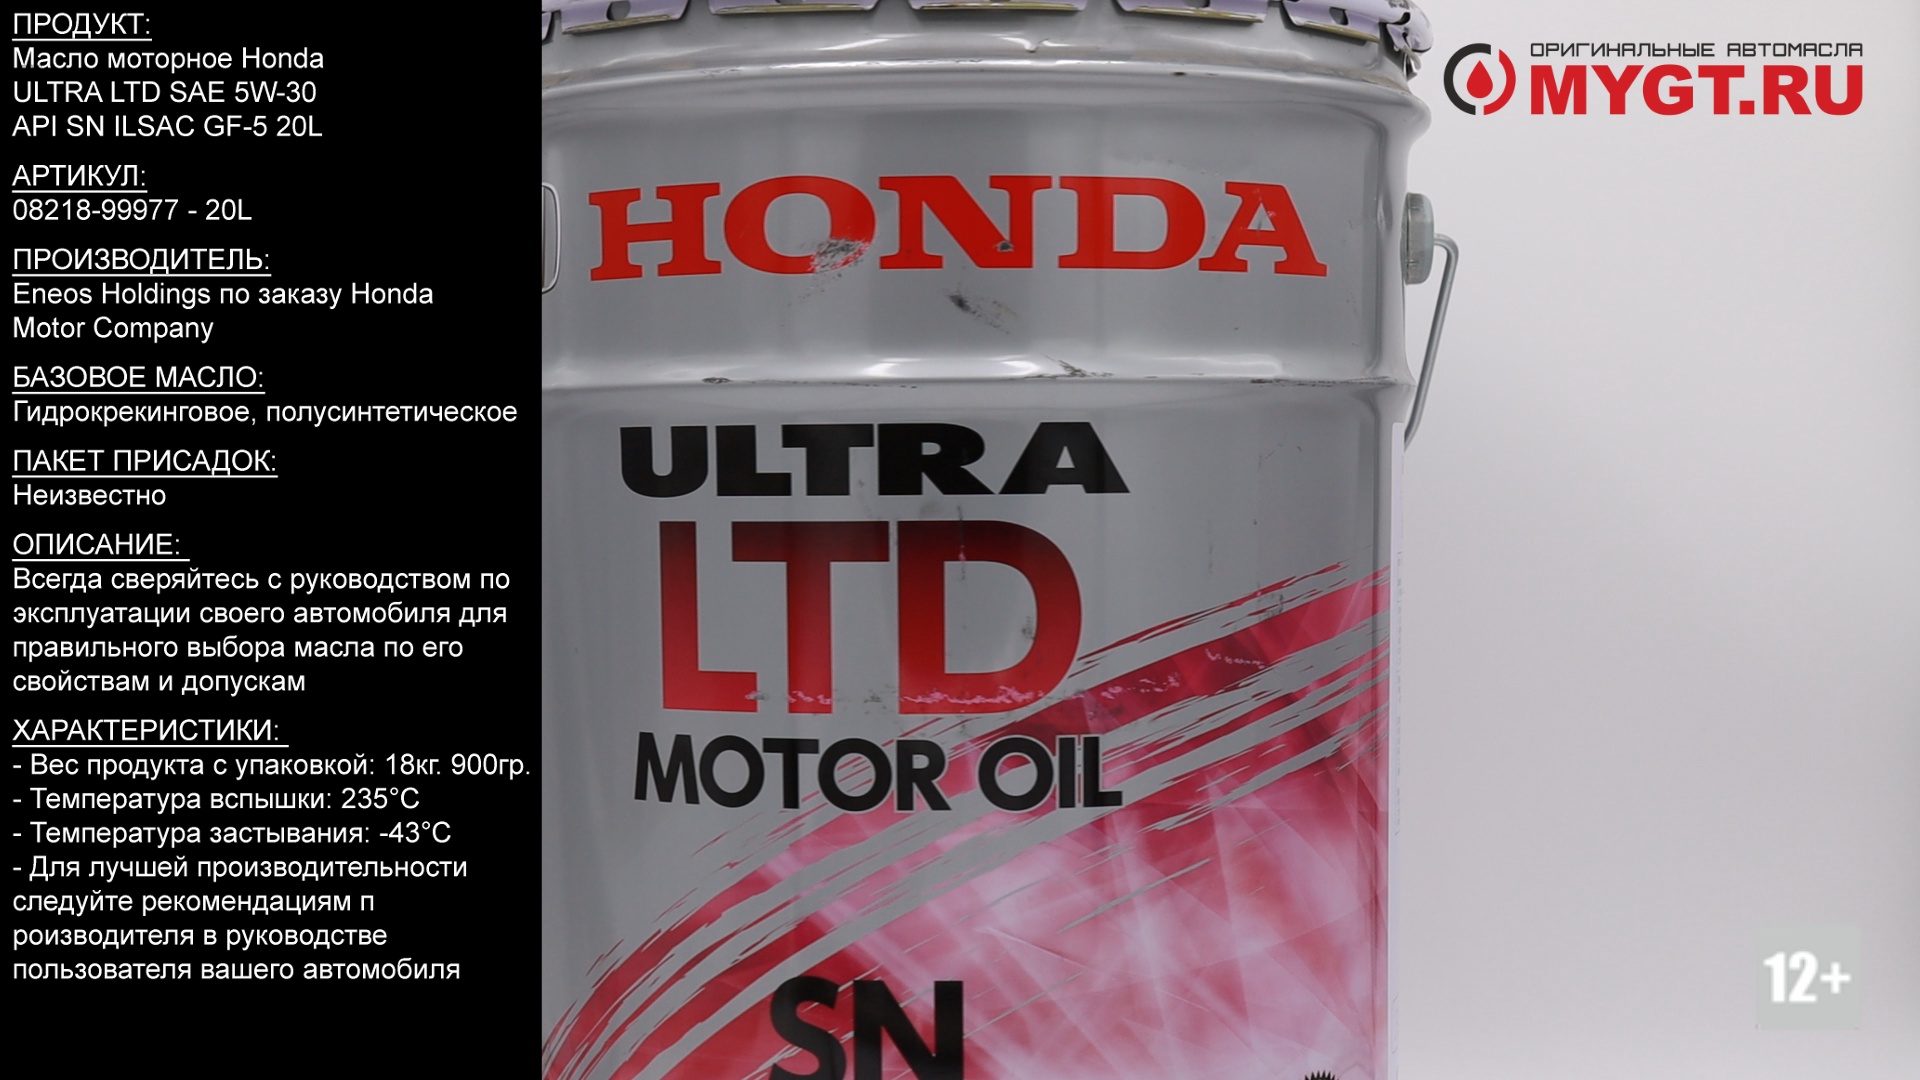 Honda Ultra Ltd 5w30 SN. Honda Ultra Leo Motor Oil SN 5w-30 ILSAC gf-5. Honda Ultra Ltd SAE 5w-30. Honda Ultra Ltd SP 5w-30 (20,0).